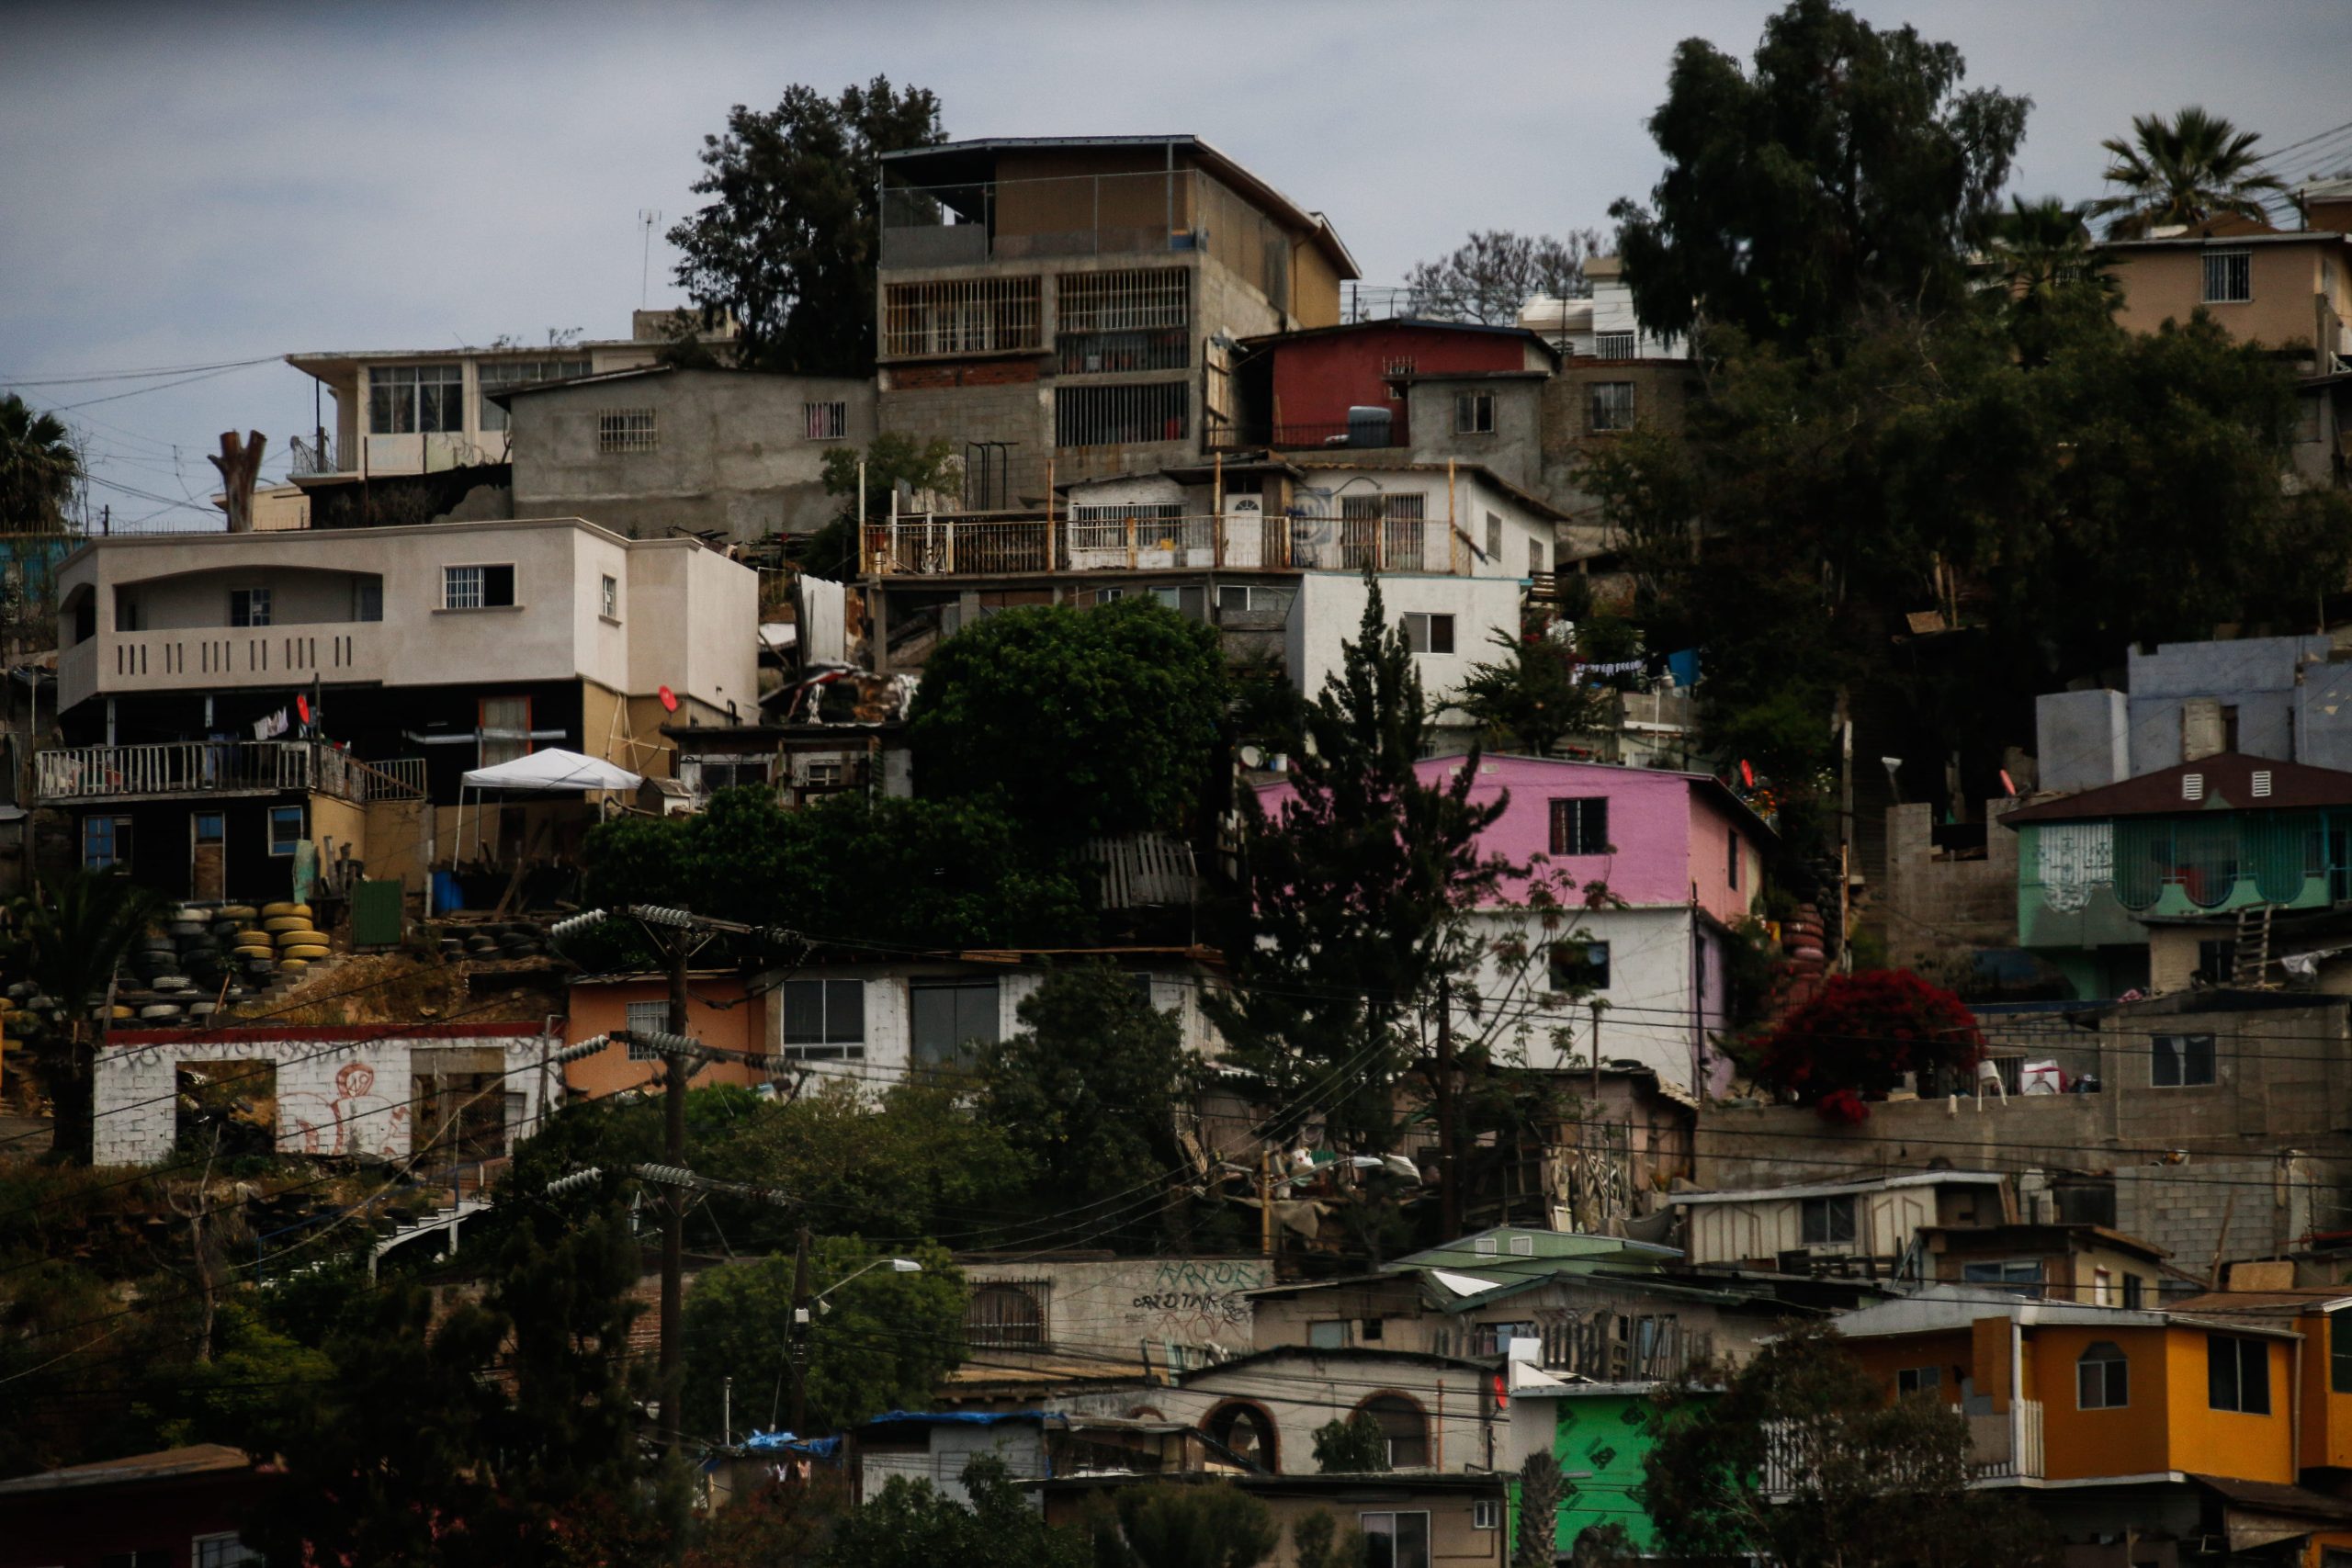 Mexico wallpaper, tijuana, poverty, hot, mess, town, ghetto, shanty town